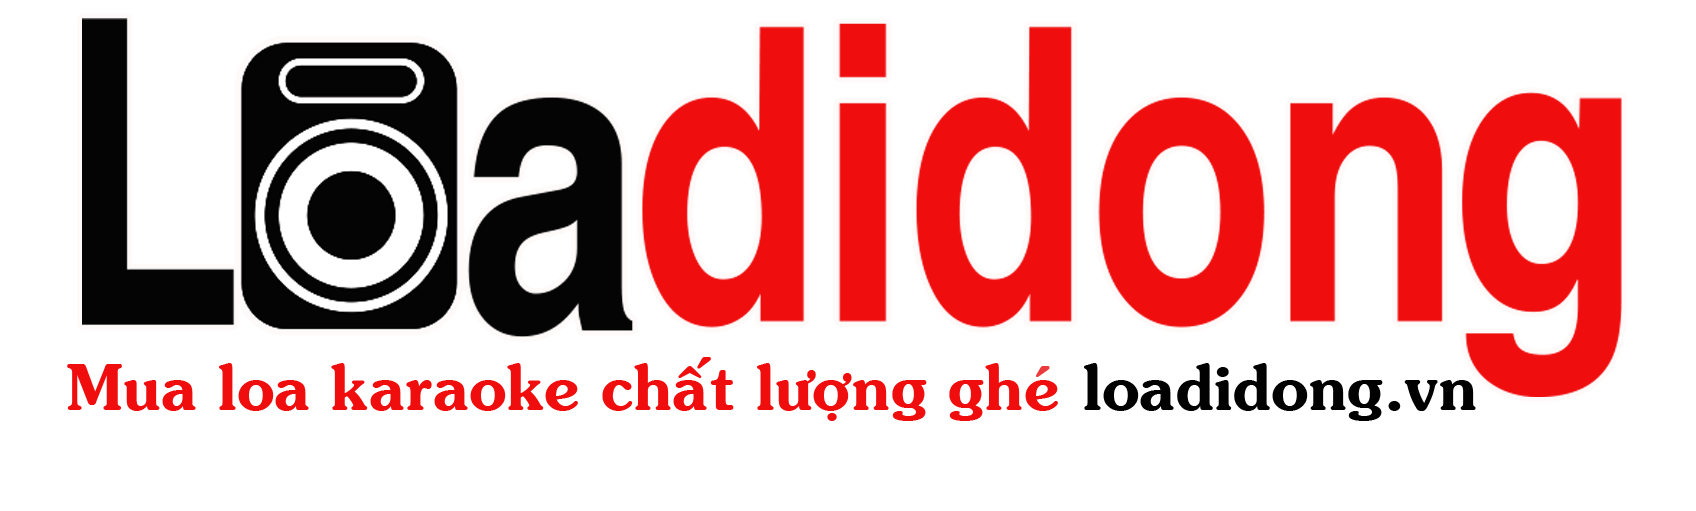 logo Loadidong.vn